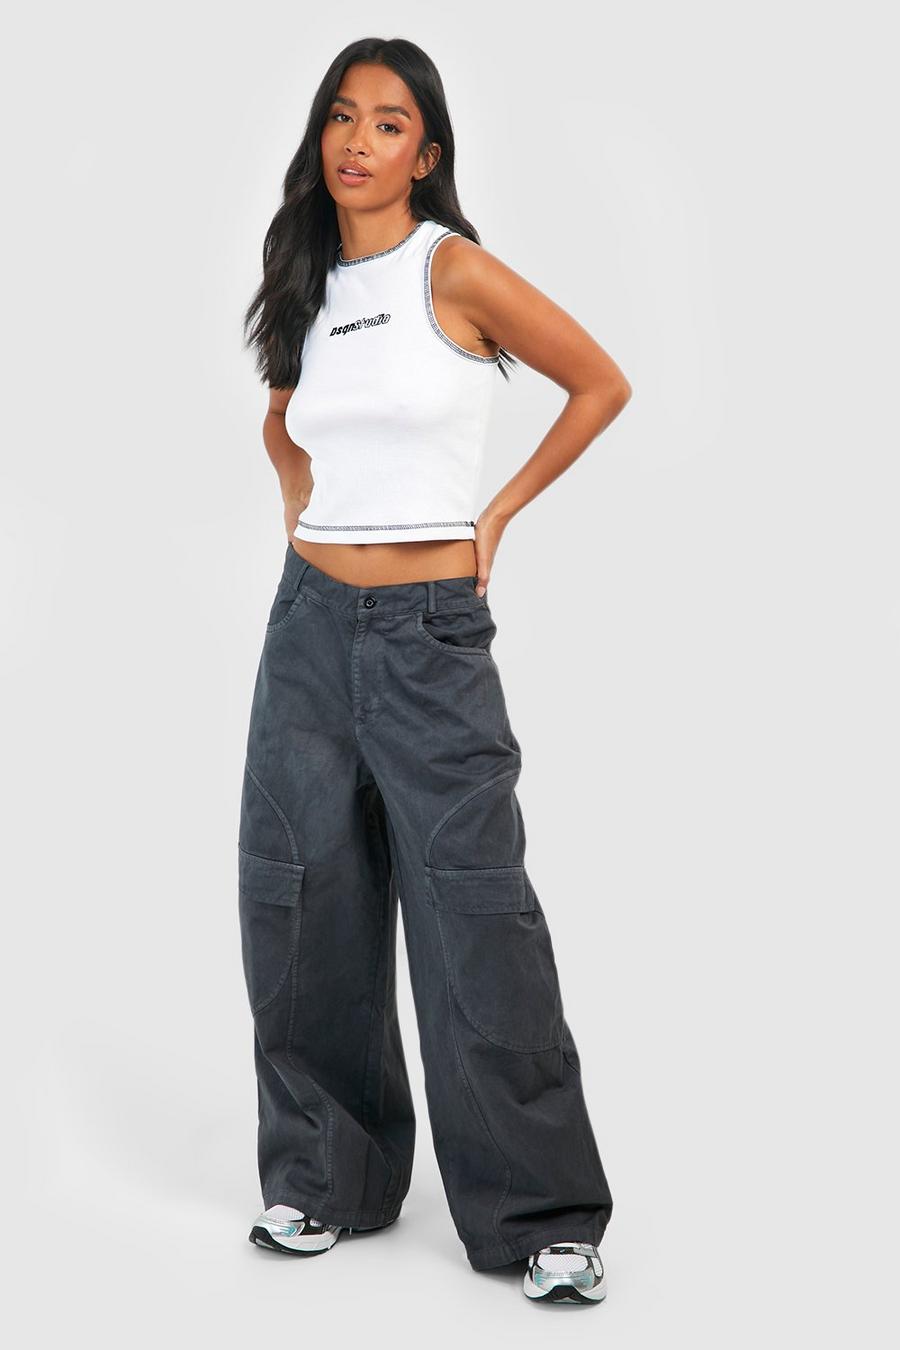 Best Deal for Aimik July 4 Womens Dress Pants Petite Short Length